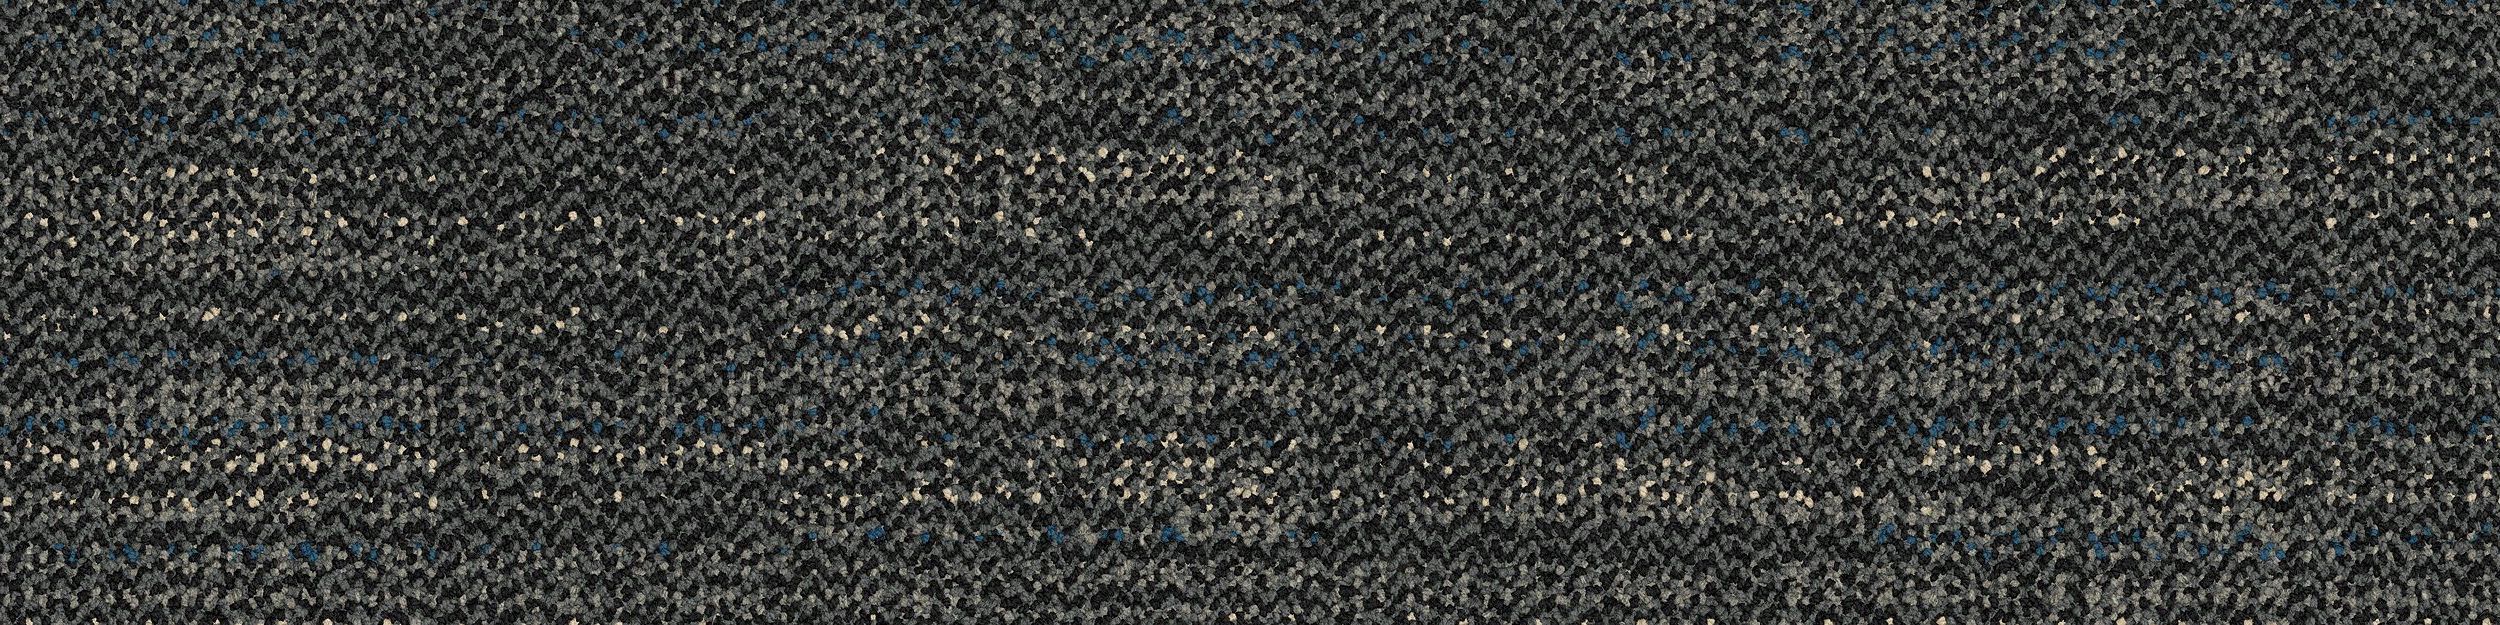 Bitrate Carpet Tile In Dark Aqua numéro d’image 2